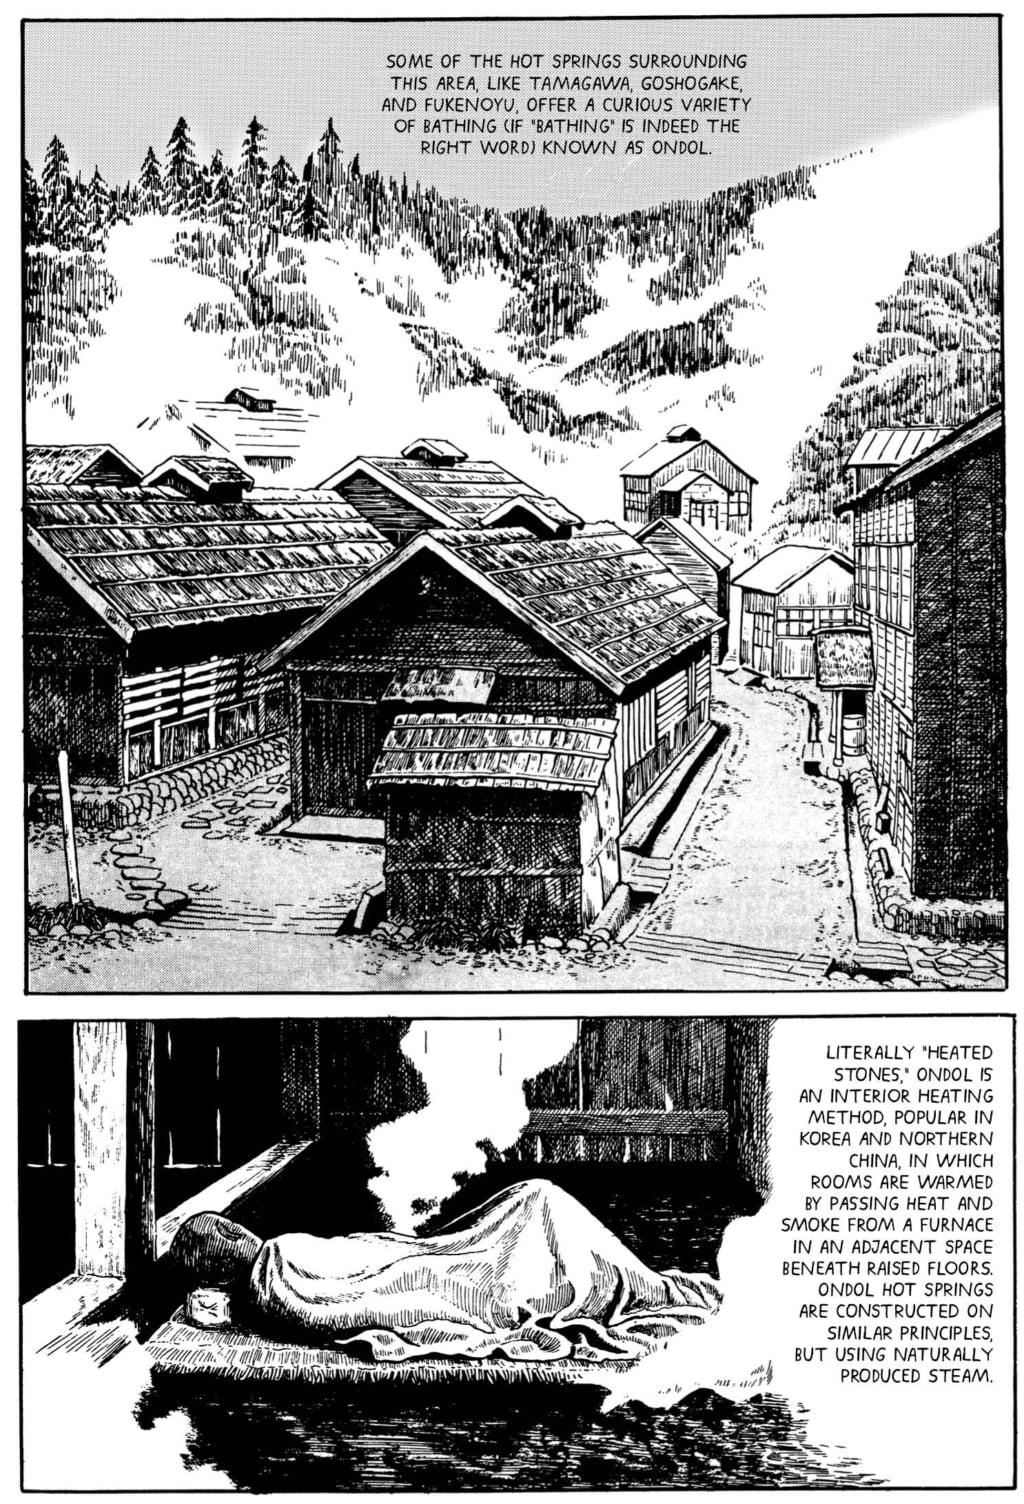 Rural Landscapes and Dark Observations, Yoshiharu Tsuge’s Manga ...